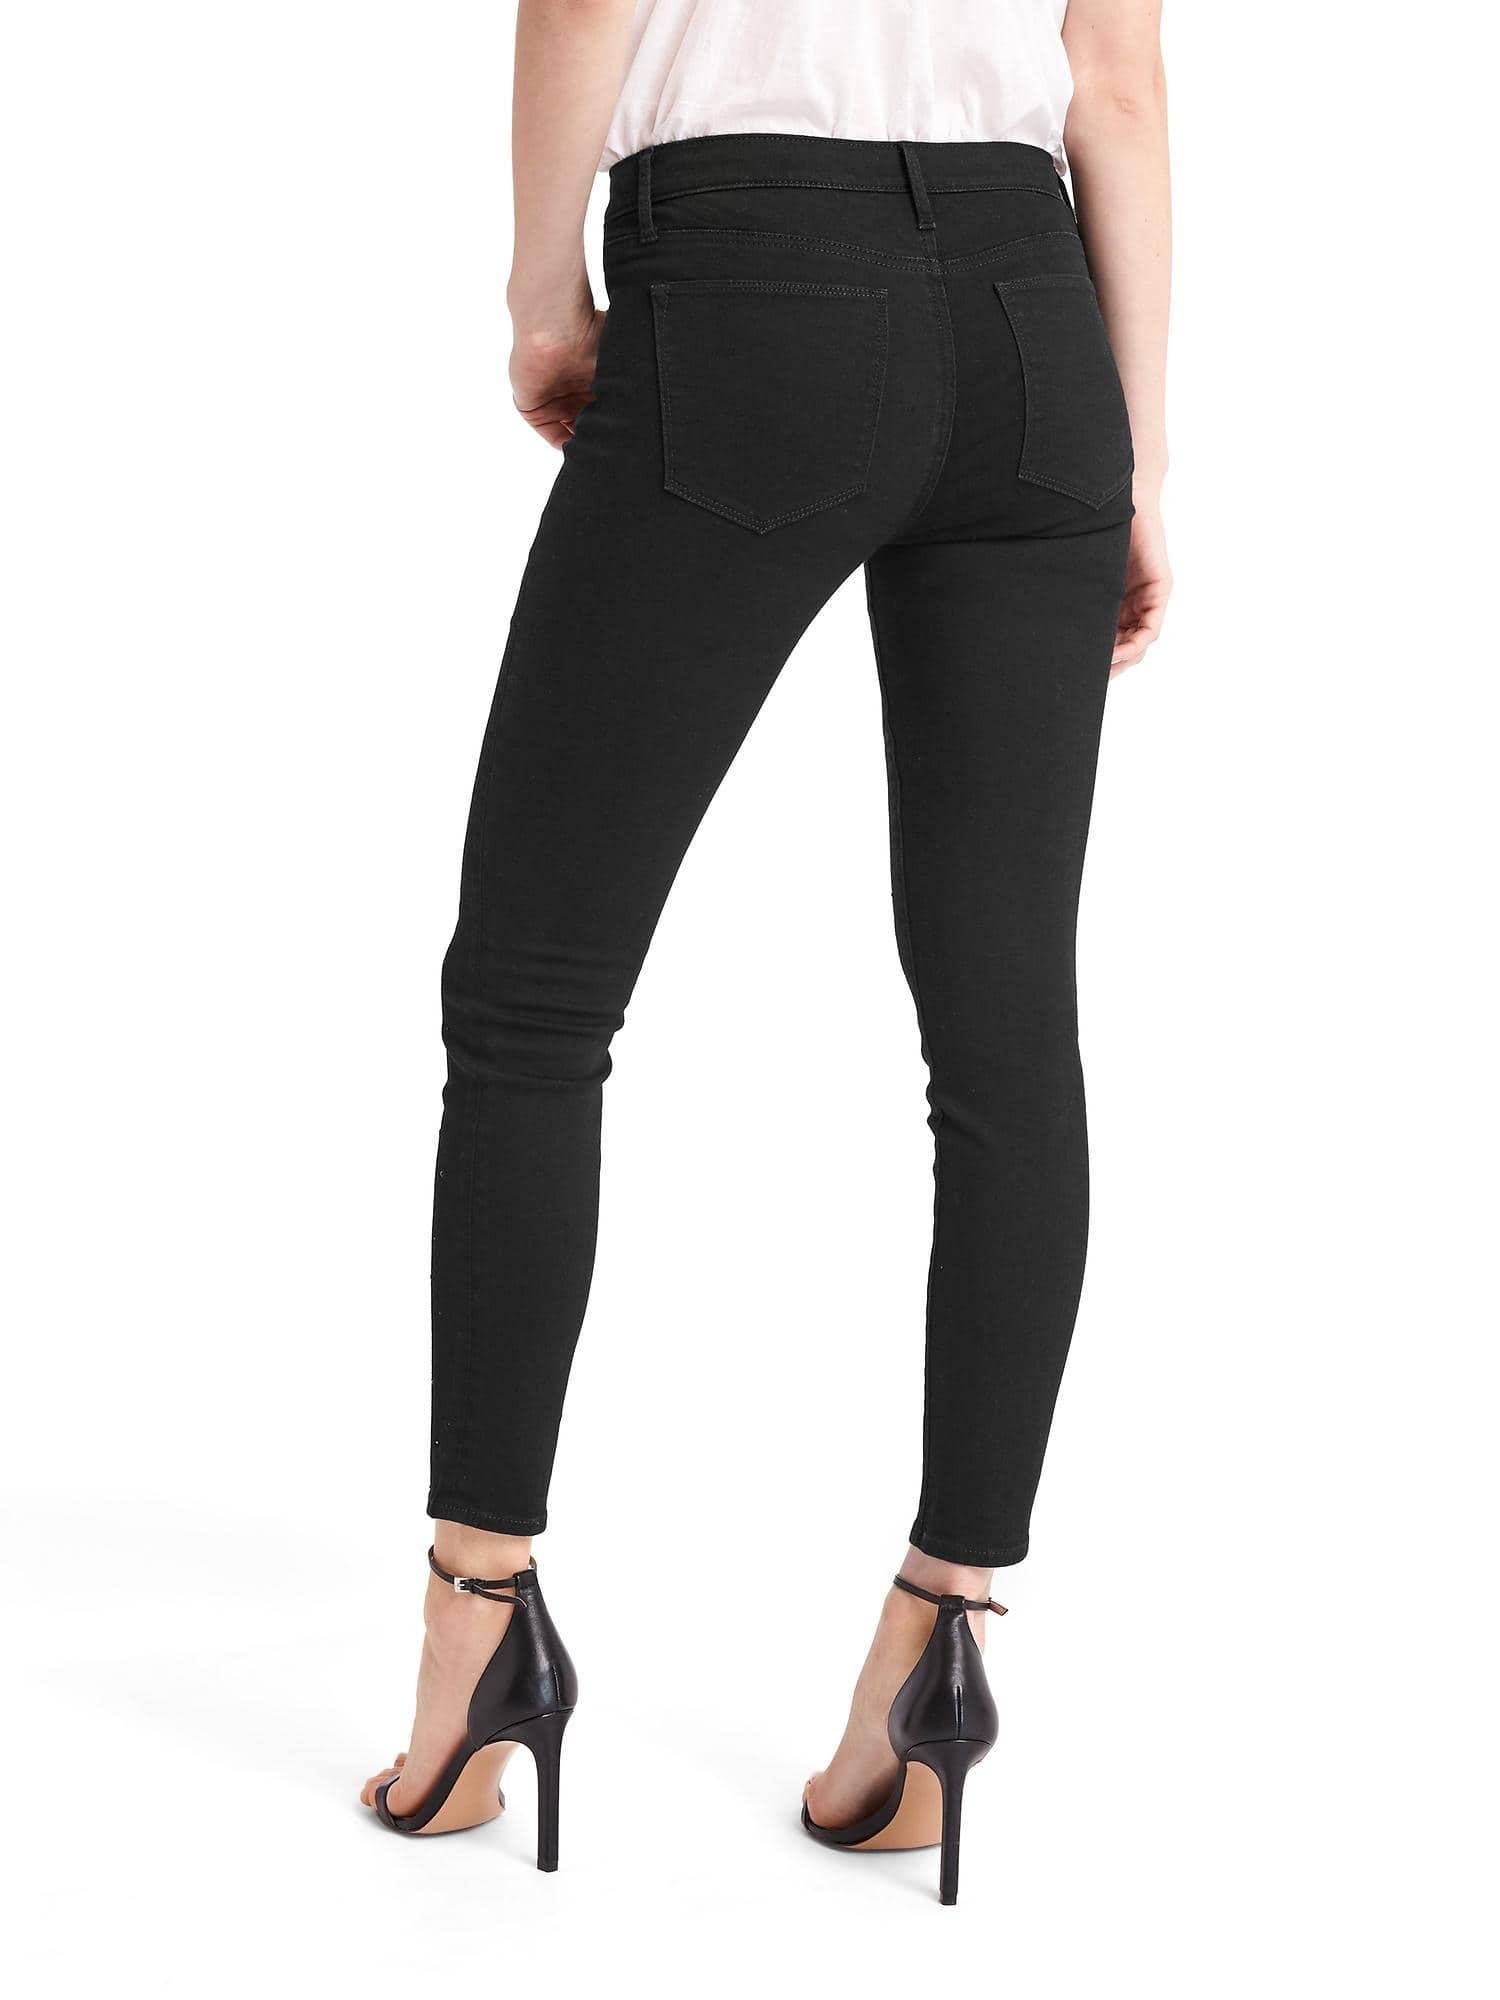 Lyst - Gap Mid Rise Stud Front True Skinny Jeans in Black